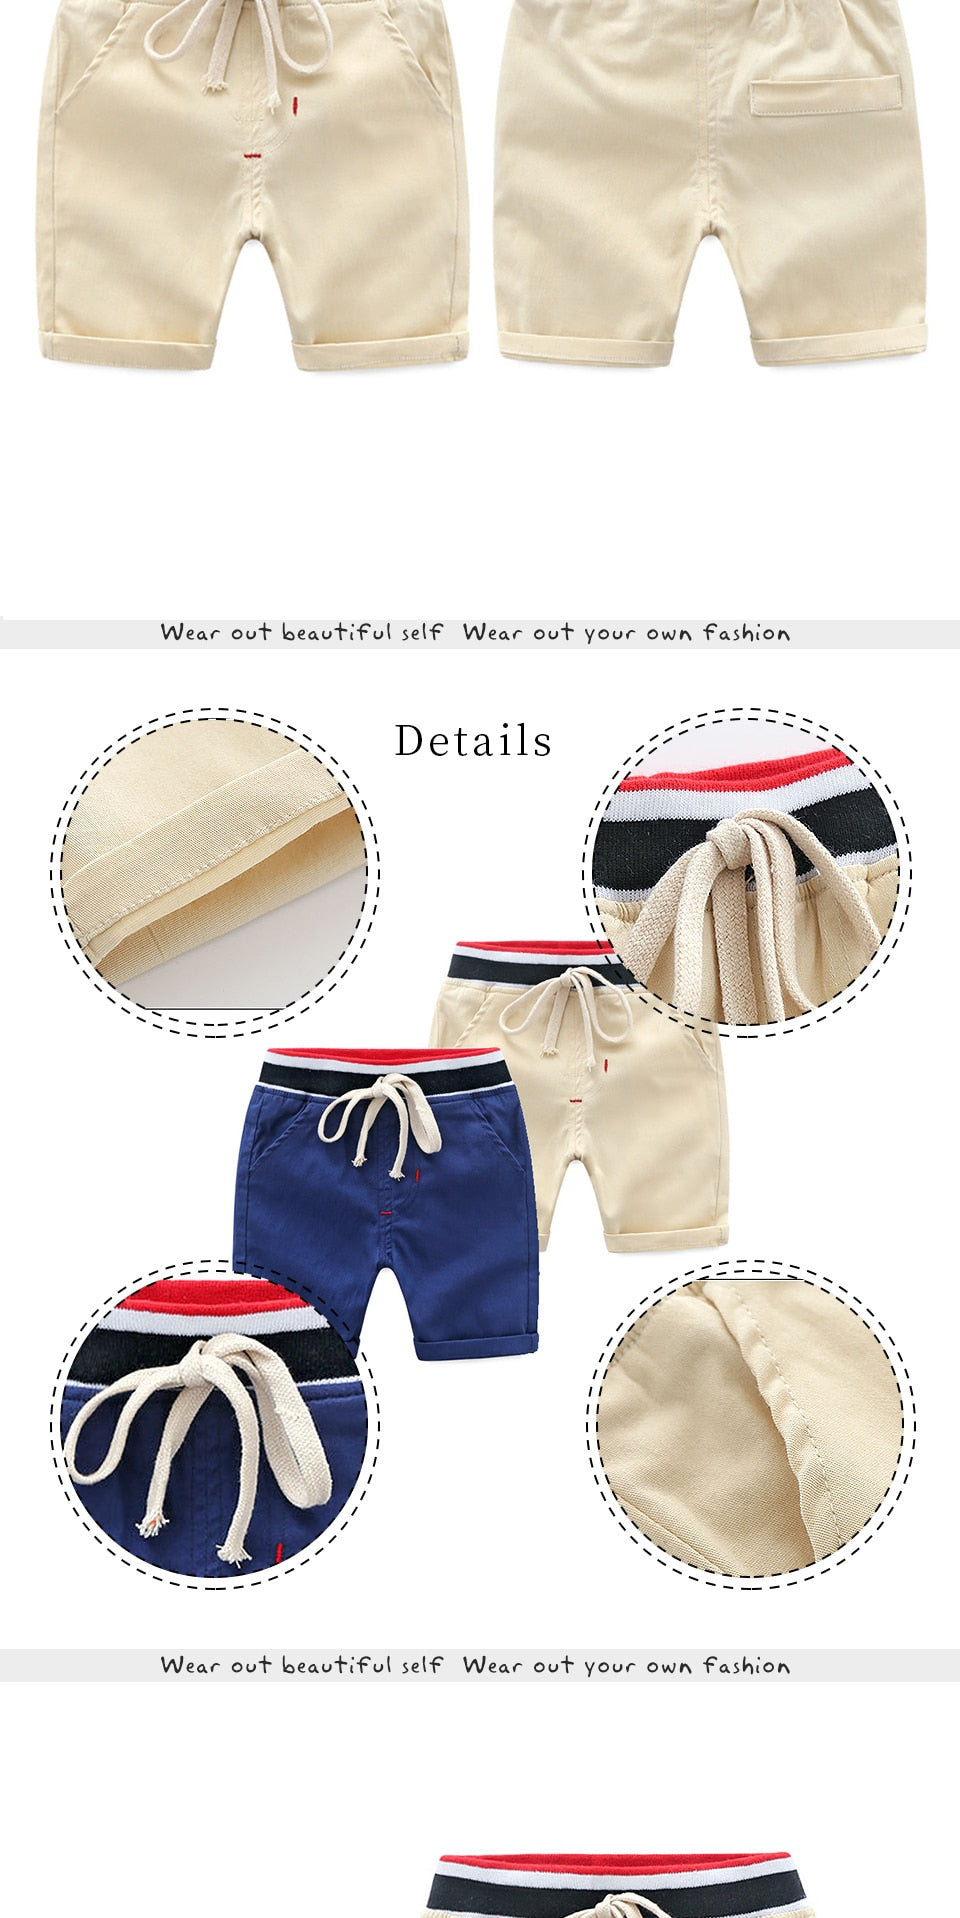 100% Cotton Kids Shorts 90 Size For Baby Boys - Sheseelady